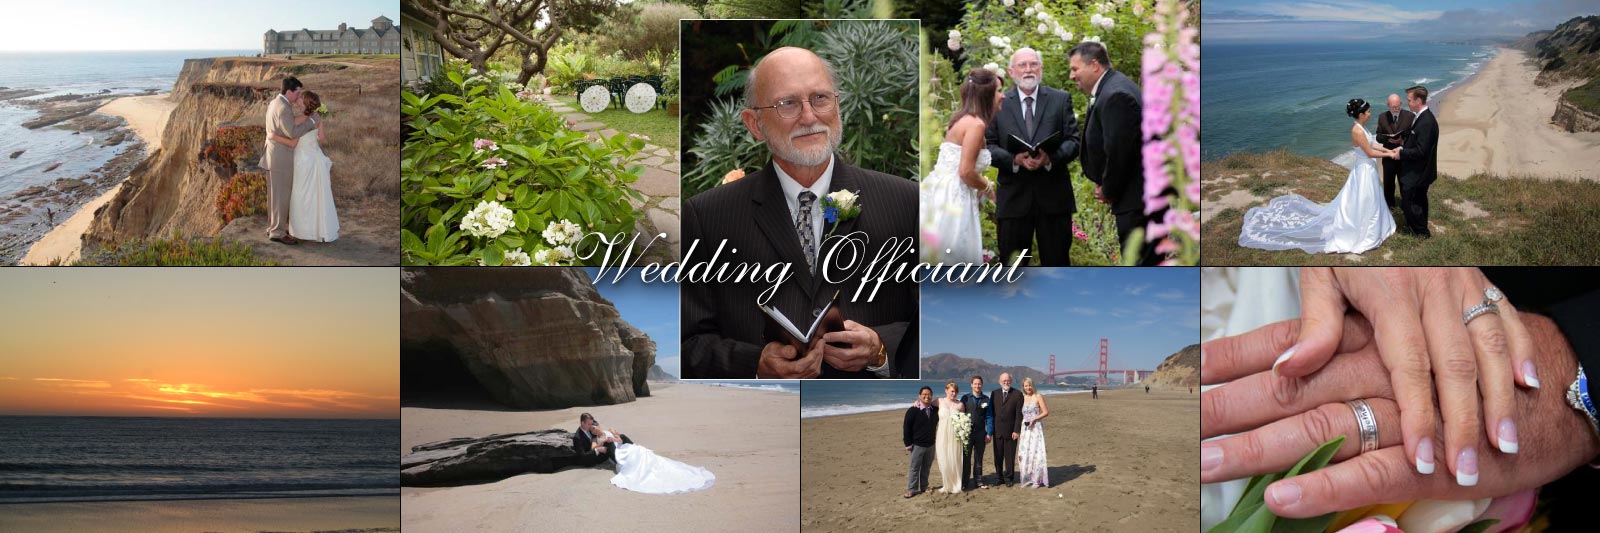 San Francisco Bay Area Wedding Officiant